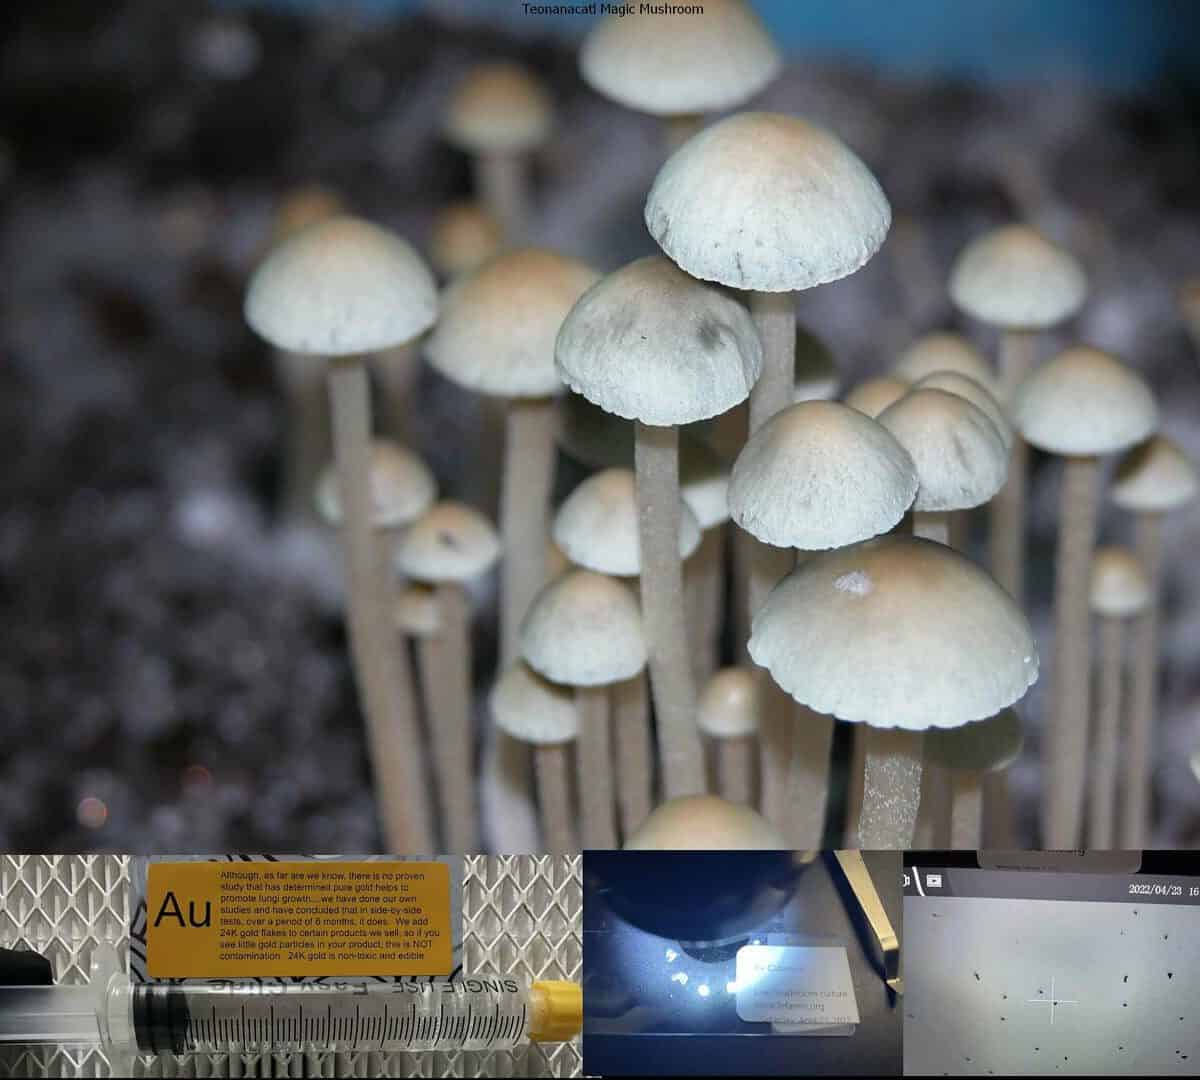 Teonanacatl Magic Mushroom spore syringe